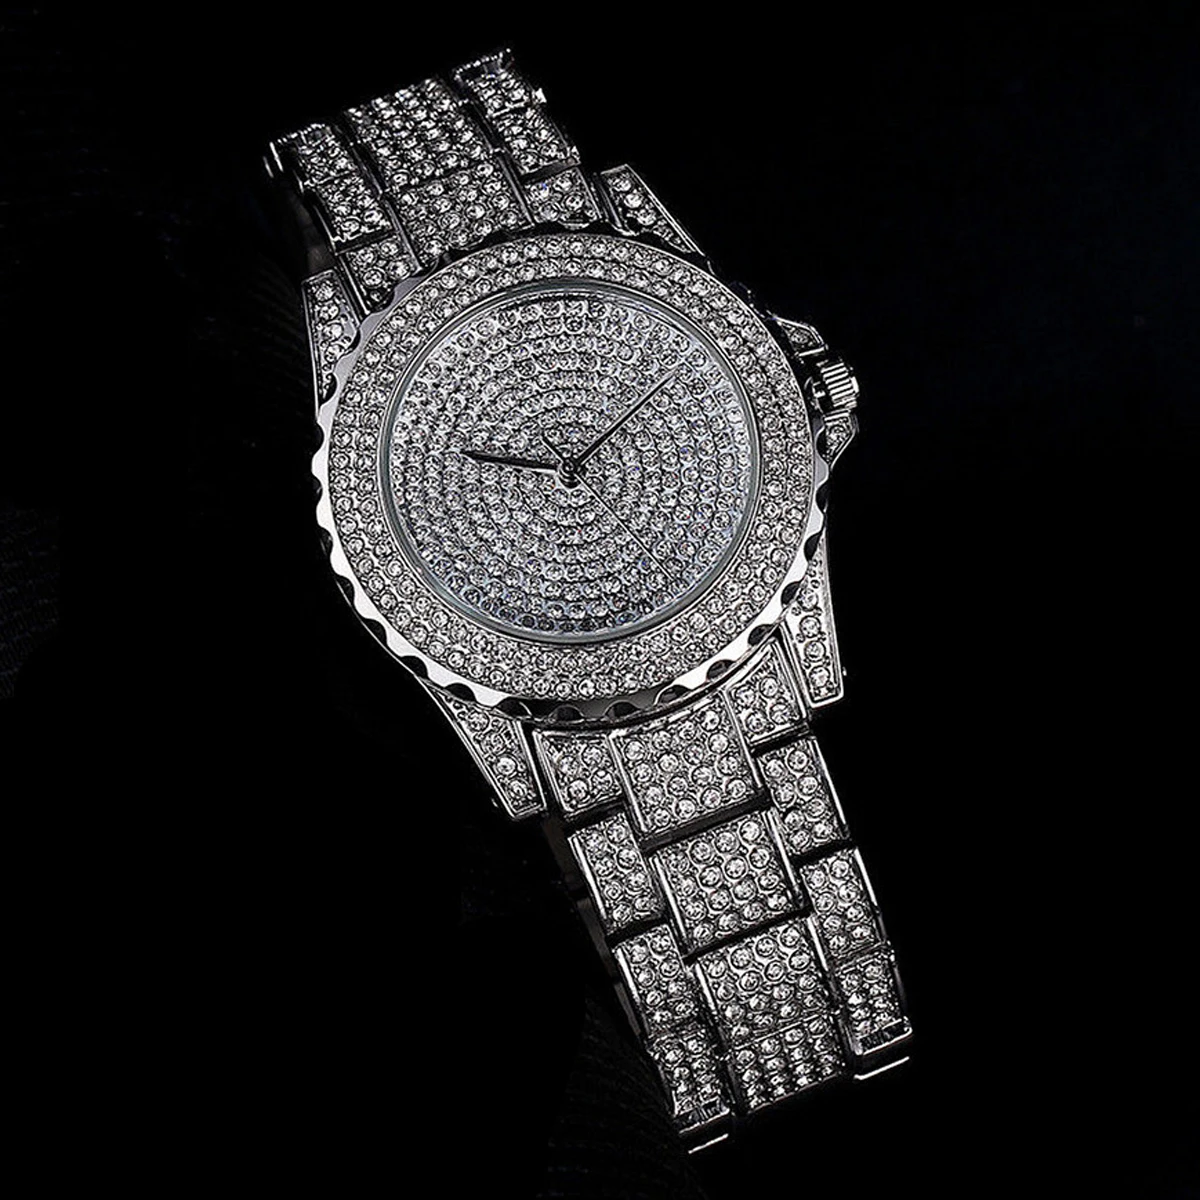 Luxury Full Crystal Bling Diamond Rhinestone Watches Stainless Steel Round Dial Dress Quartz Wristwatch Relogio Feminino Gift